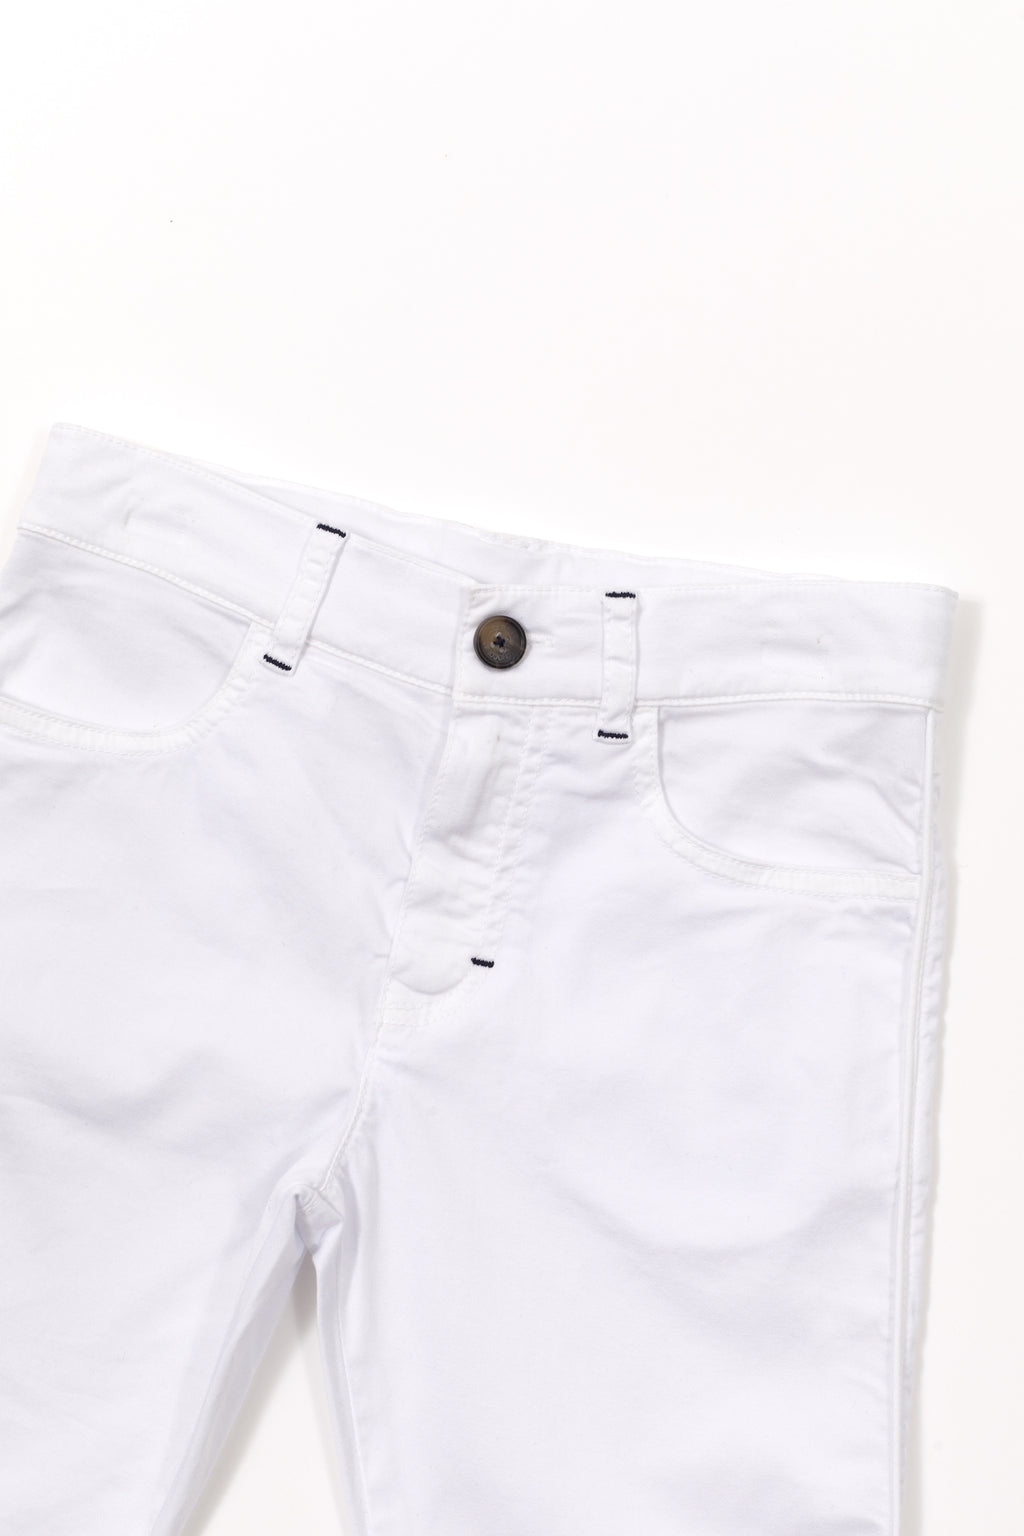 Pantalon - Sergé blanc